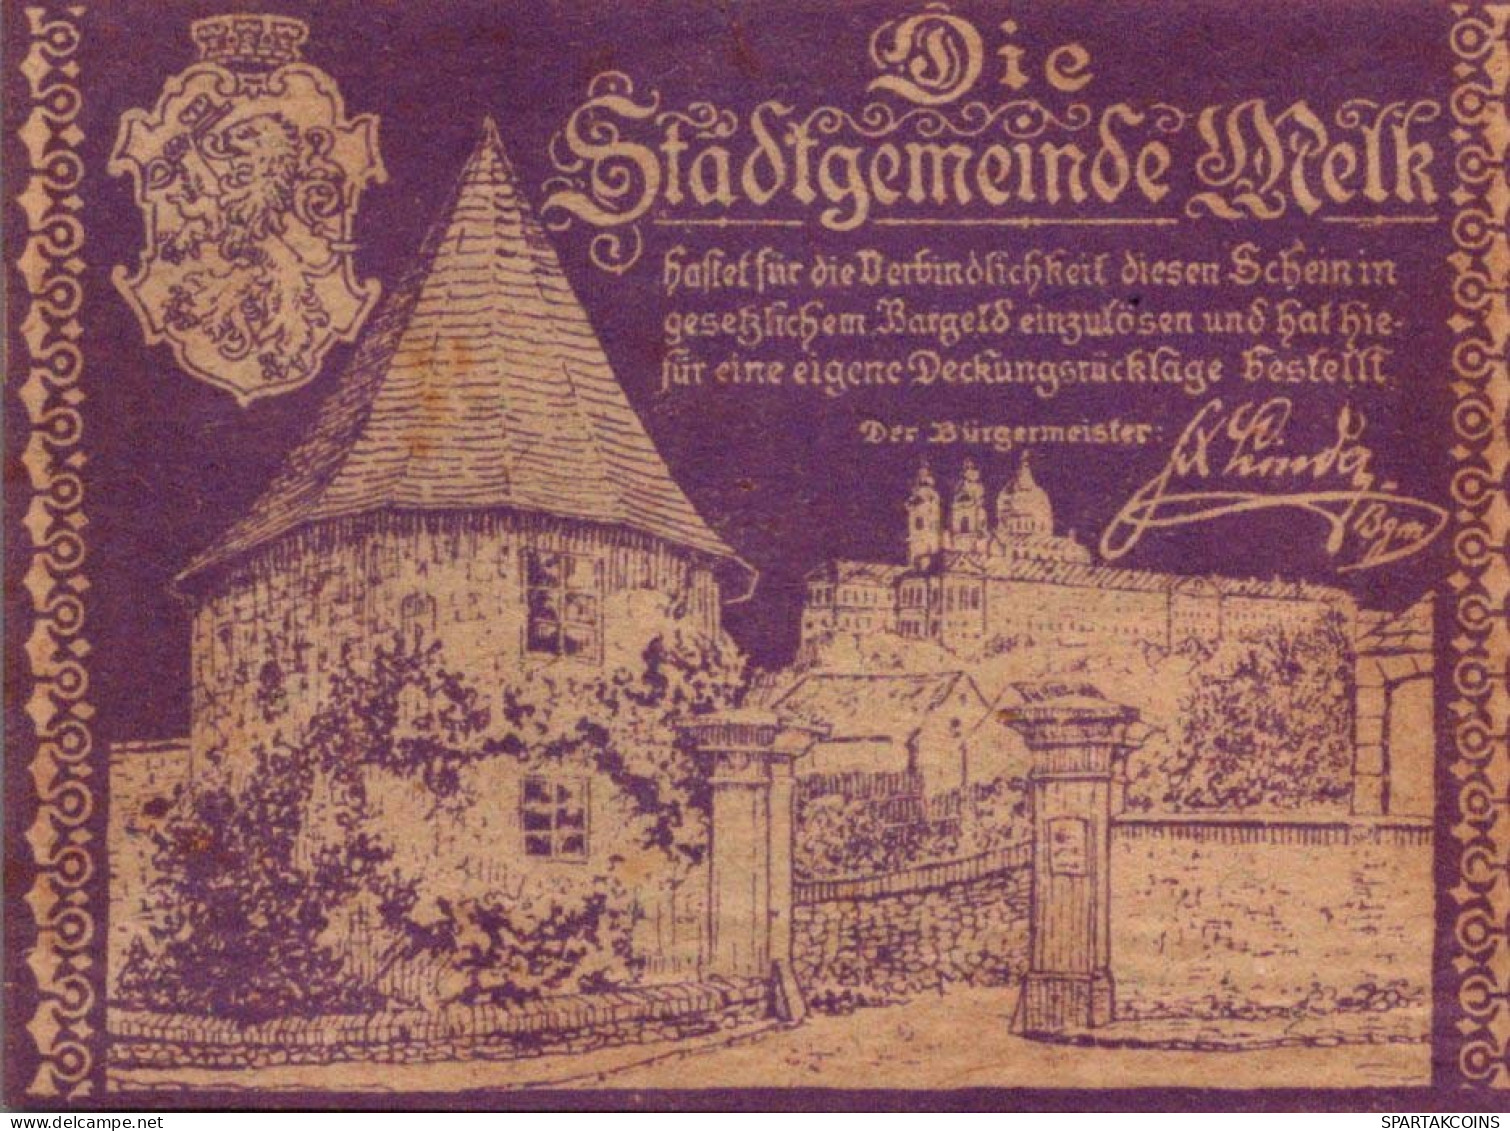 10 HELLER 1920 Stadt MELK Niedrigeren Österreich Notgeld Papiergeld Banknote #PG627 - [11] Lokale Uitgaven